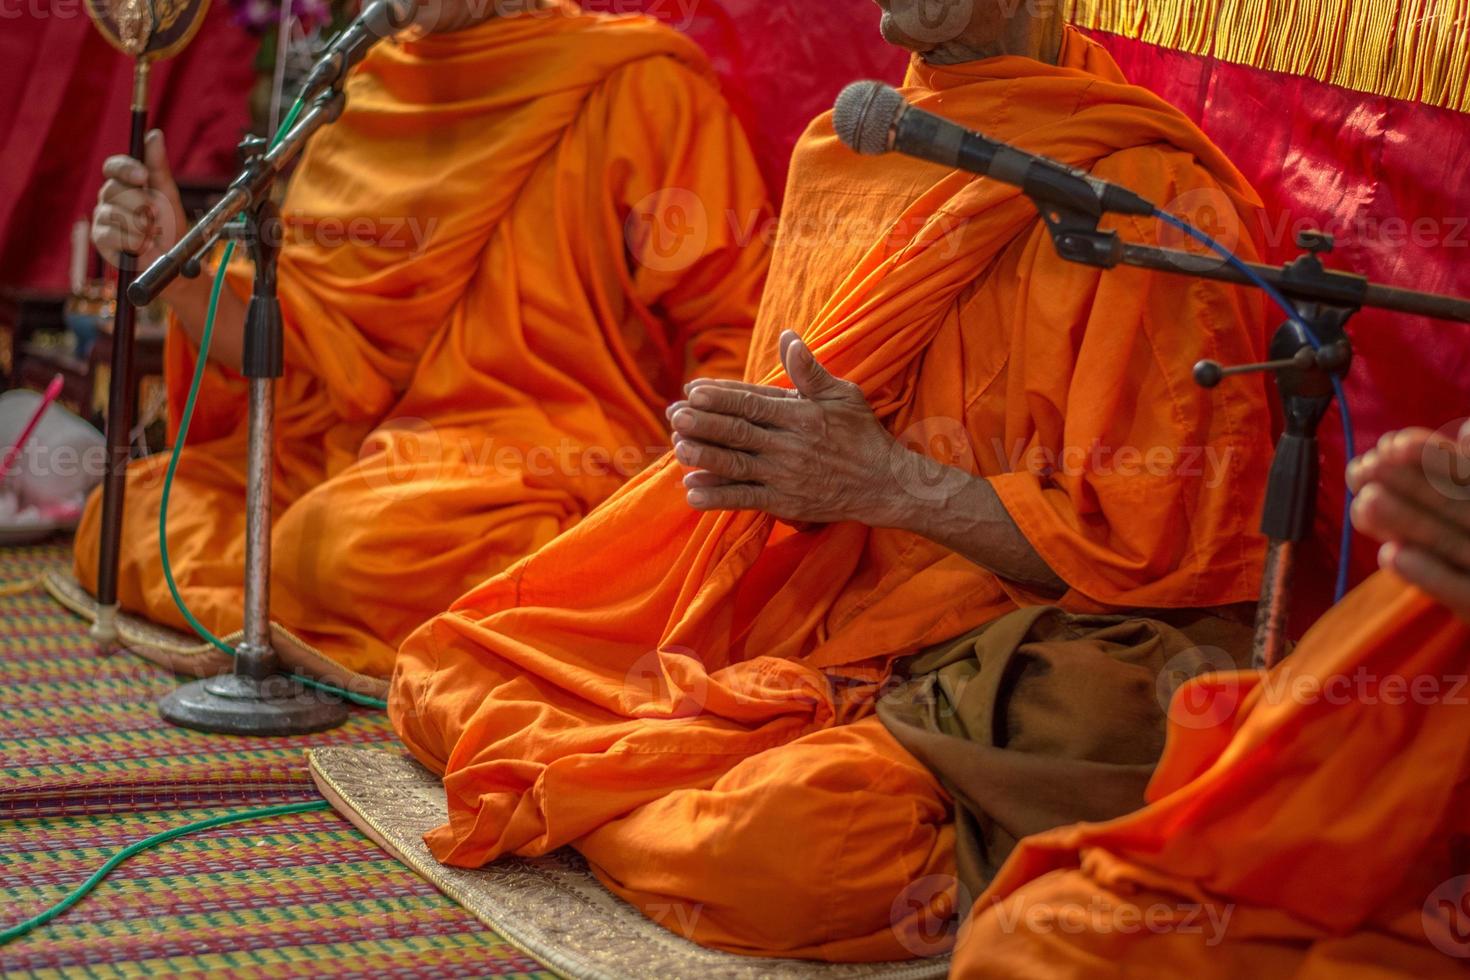 monniken bidden bidden is religieuze rituelen in Thaise ceremonie. foto